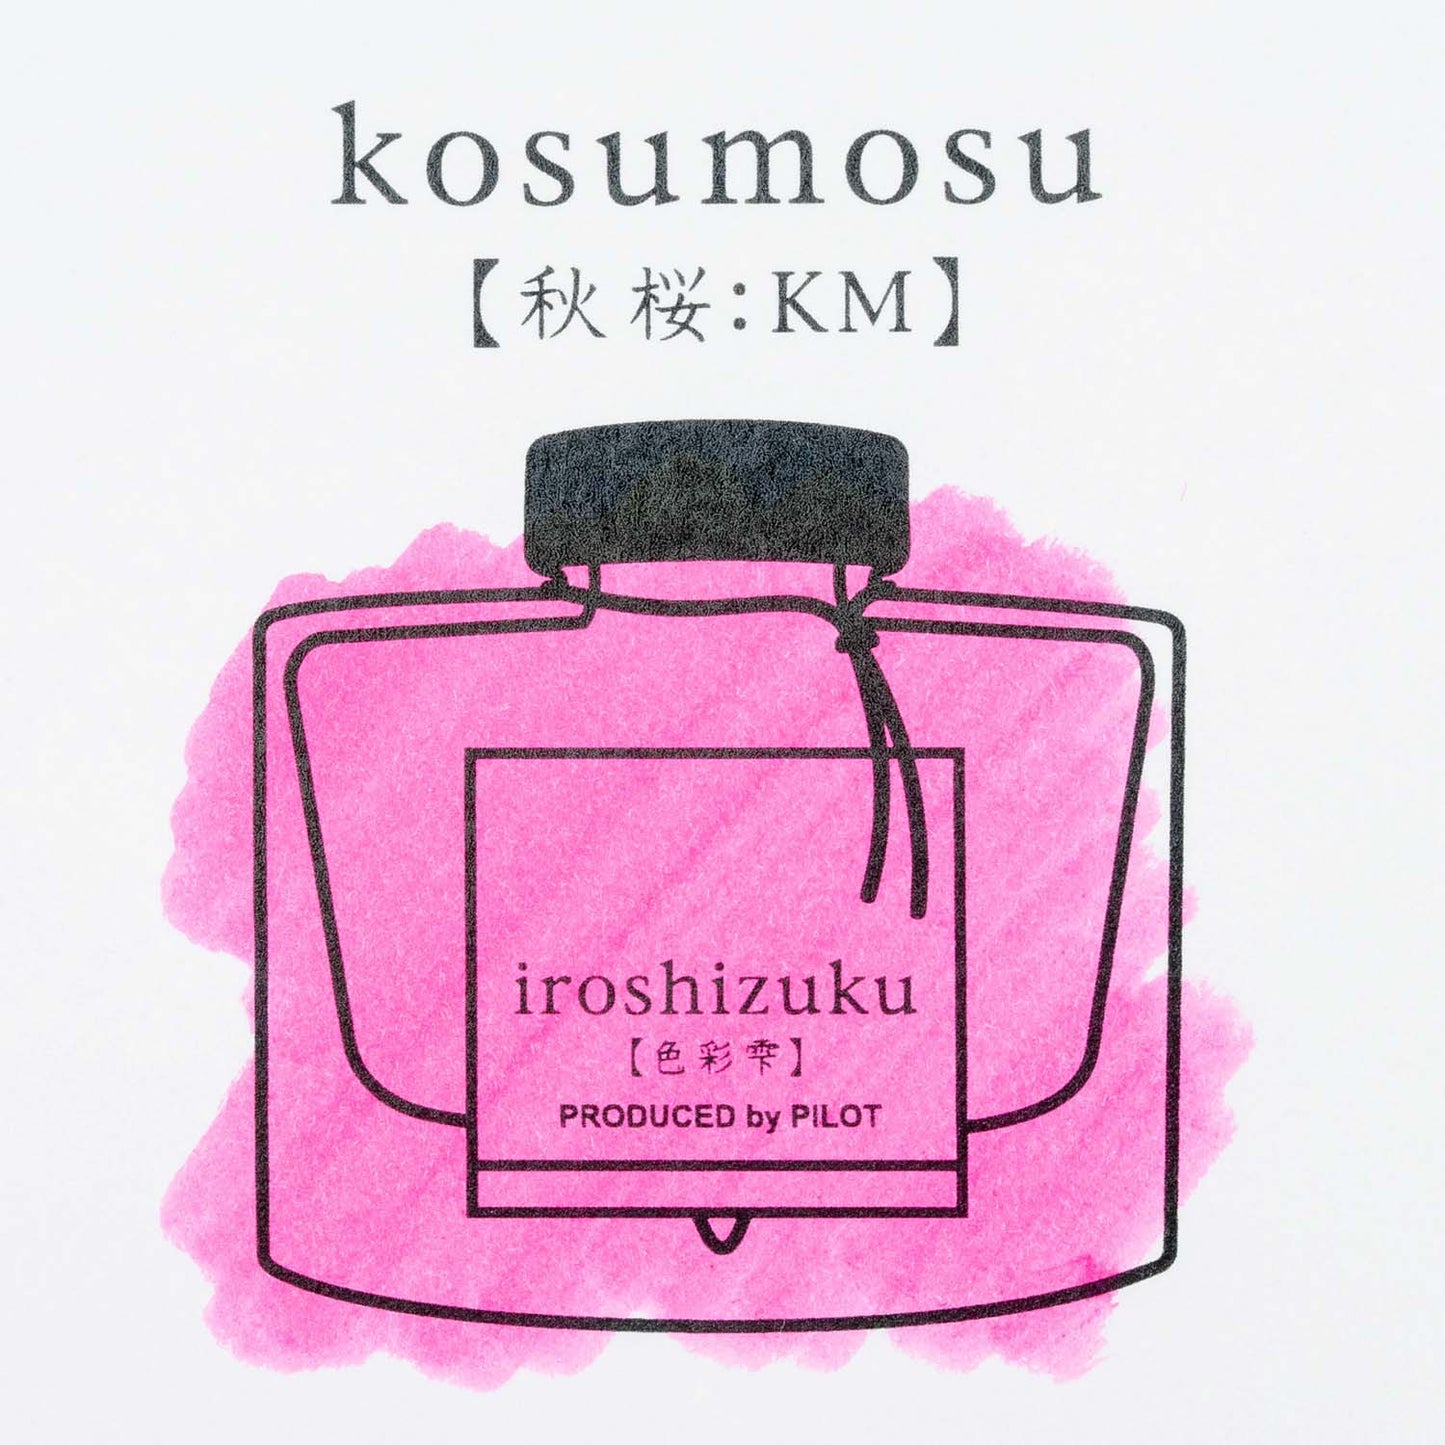 Pilot Iroshizuku Fountain Pen Ink - Kosumosu (Cosmos) - 50 ml Bottle Pink